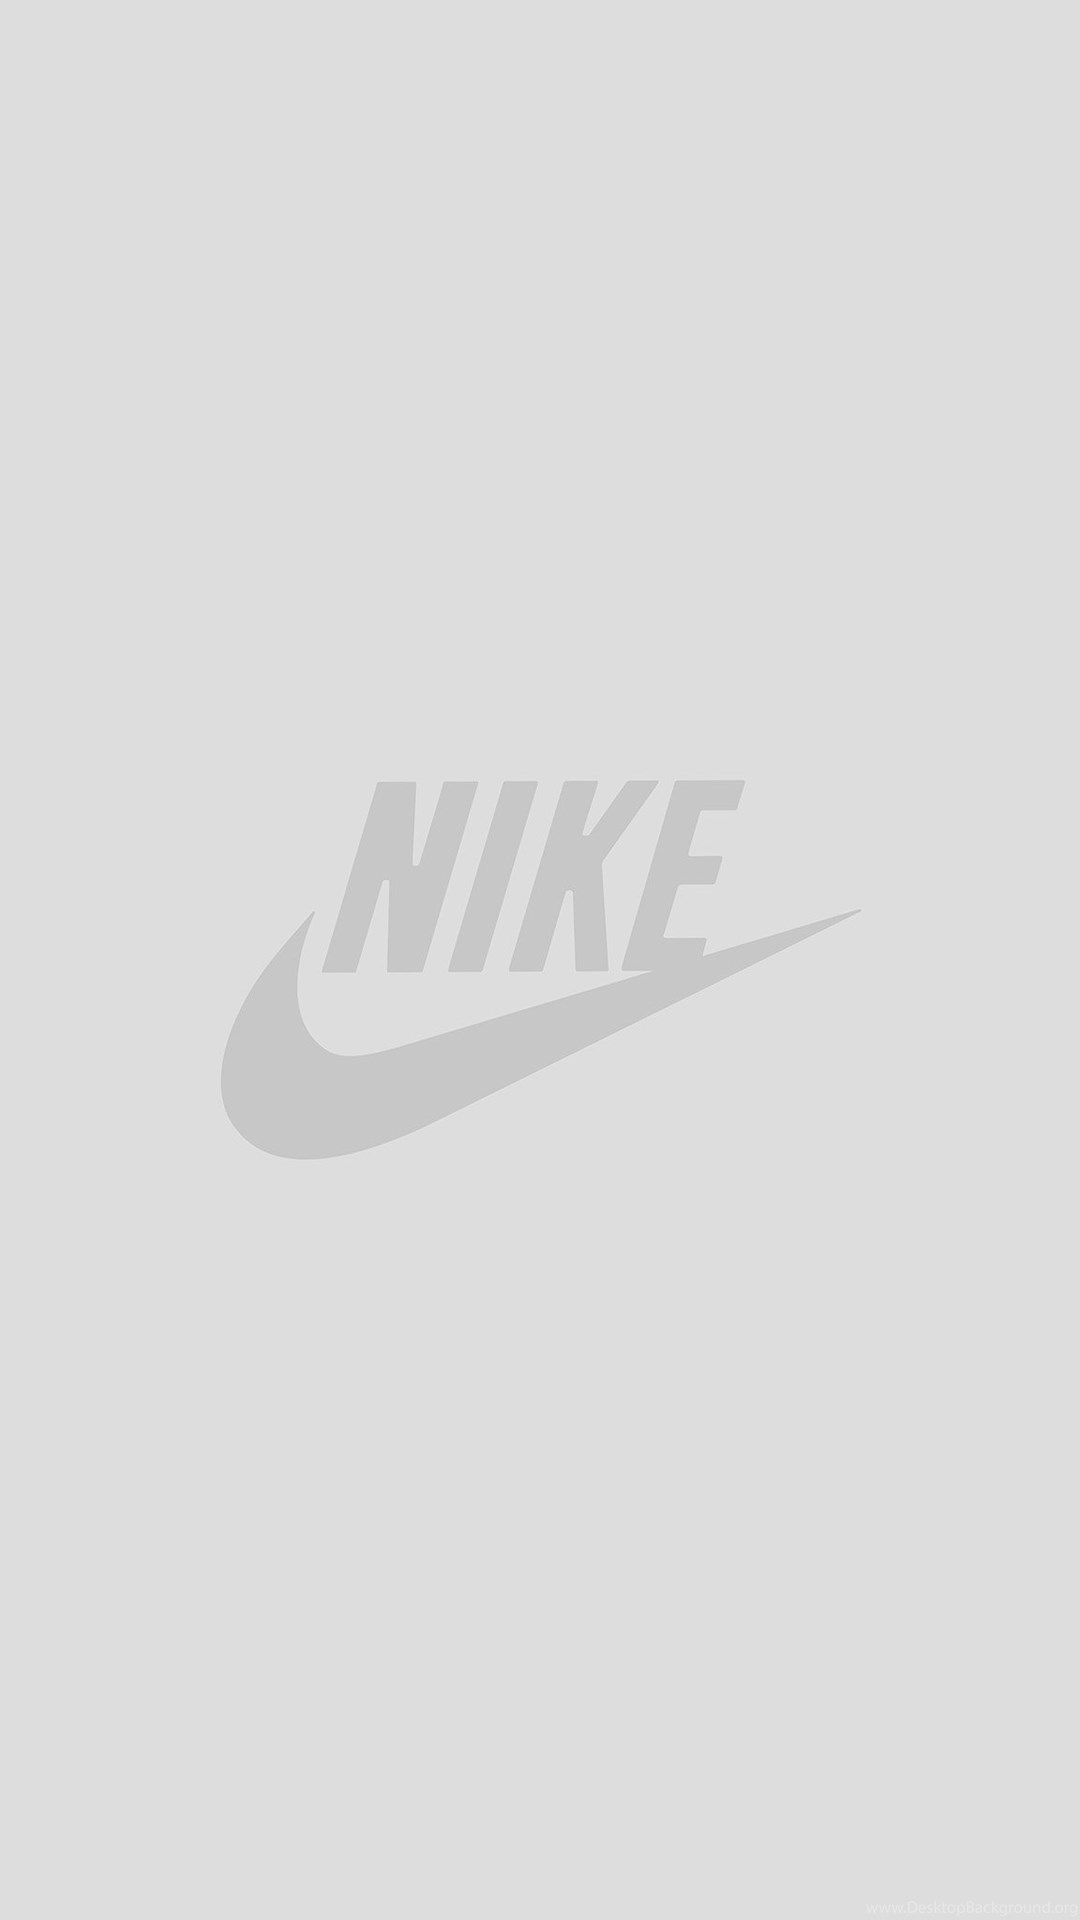 Nike Logo Sports Art Minimal Simple White iPad Air Wallpaper. Desktop Background